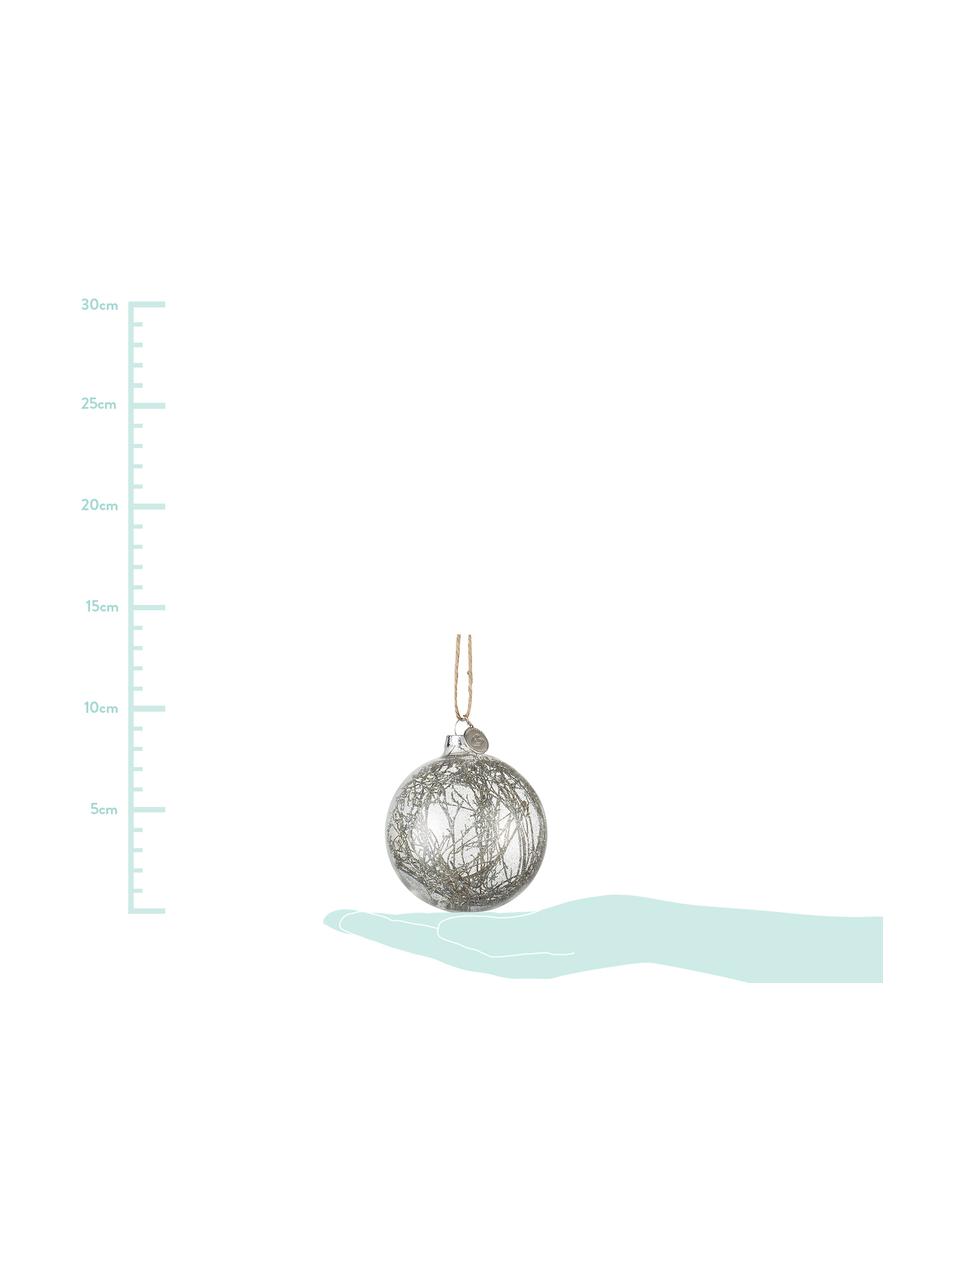 Kerstballen Mernia, 2 stuks, Ophanglus: jute, Transparant, zilverkleurig, Ø 8 cm